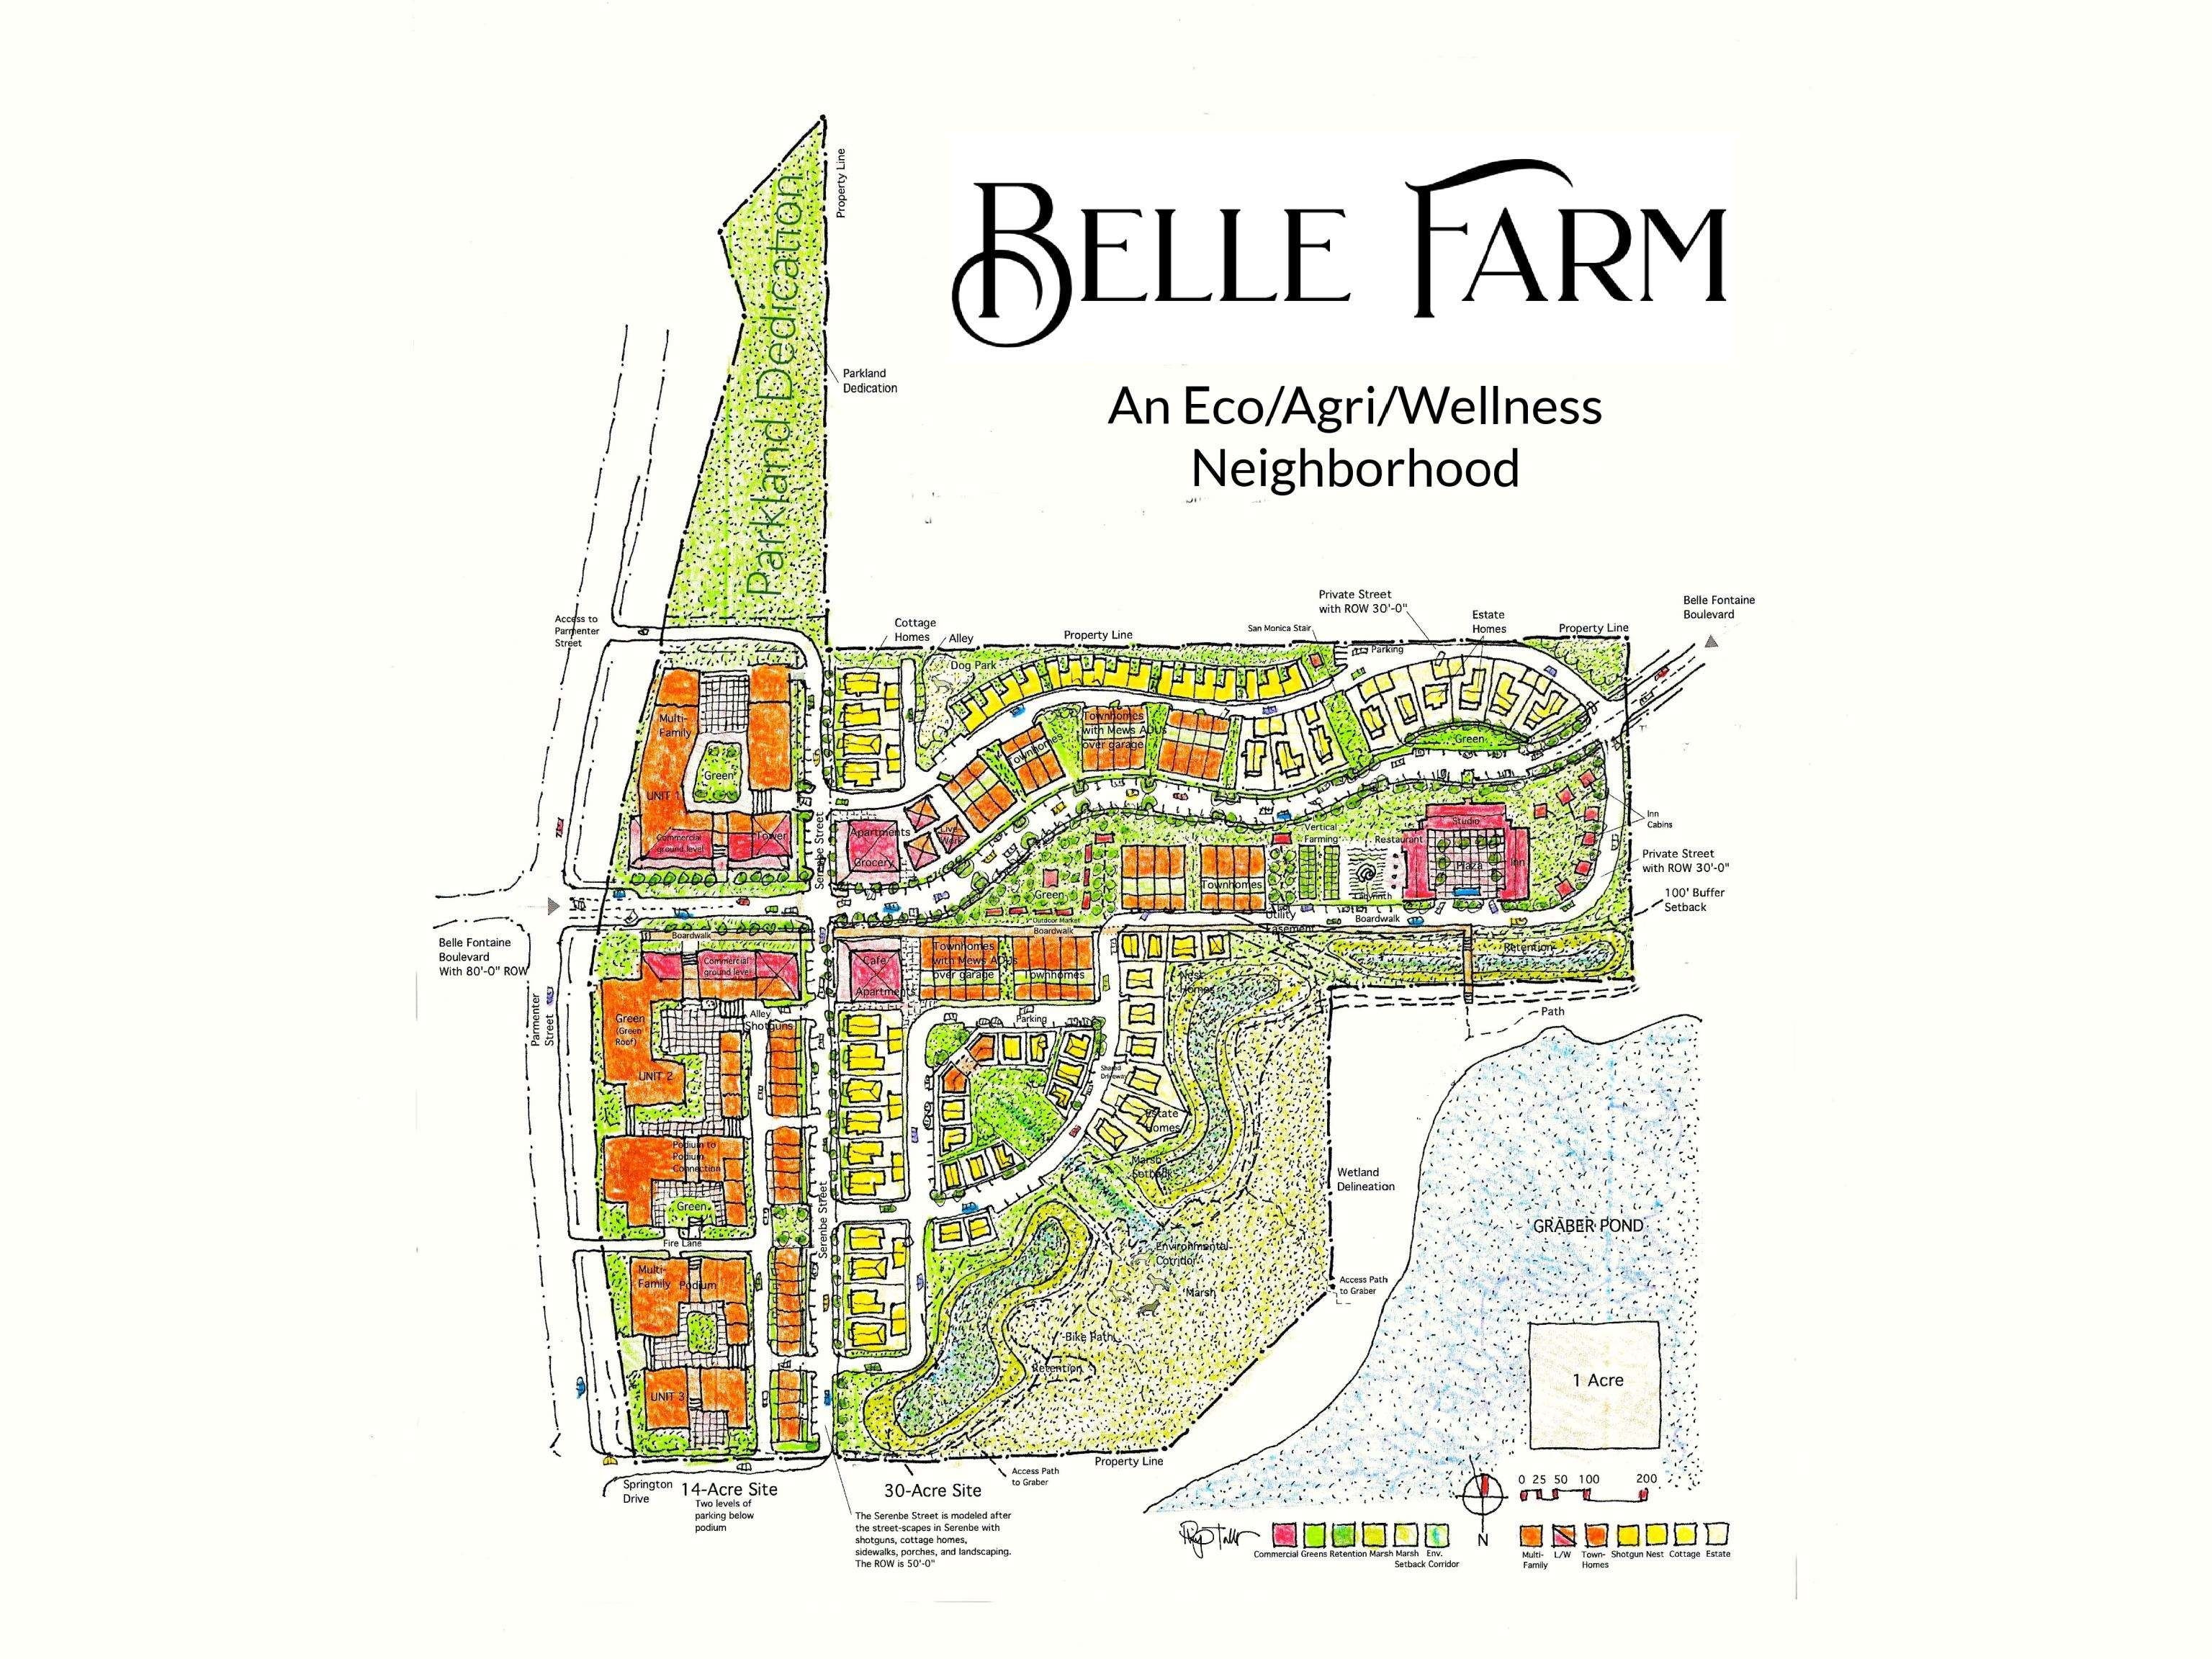 2. Lot 39 Belle Farm